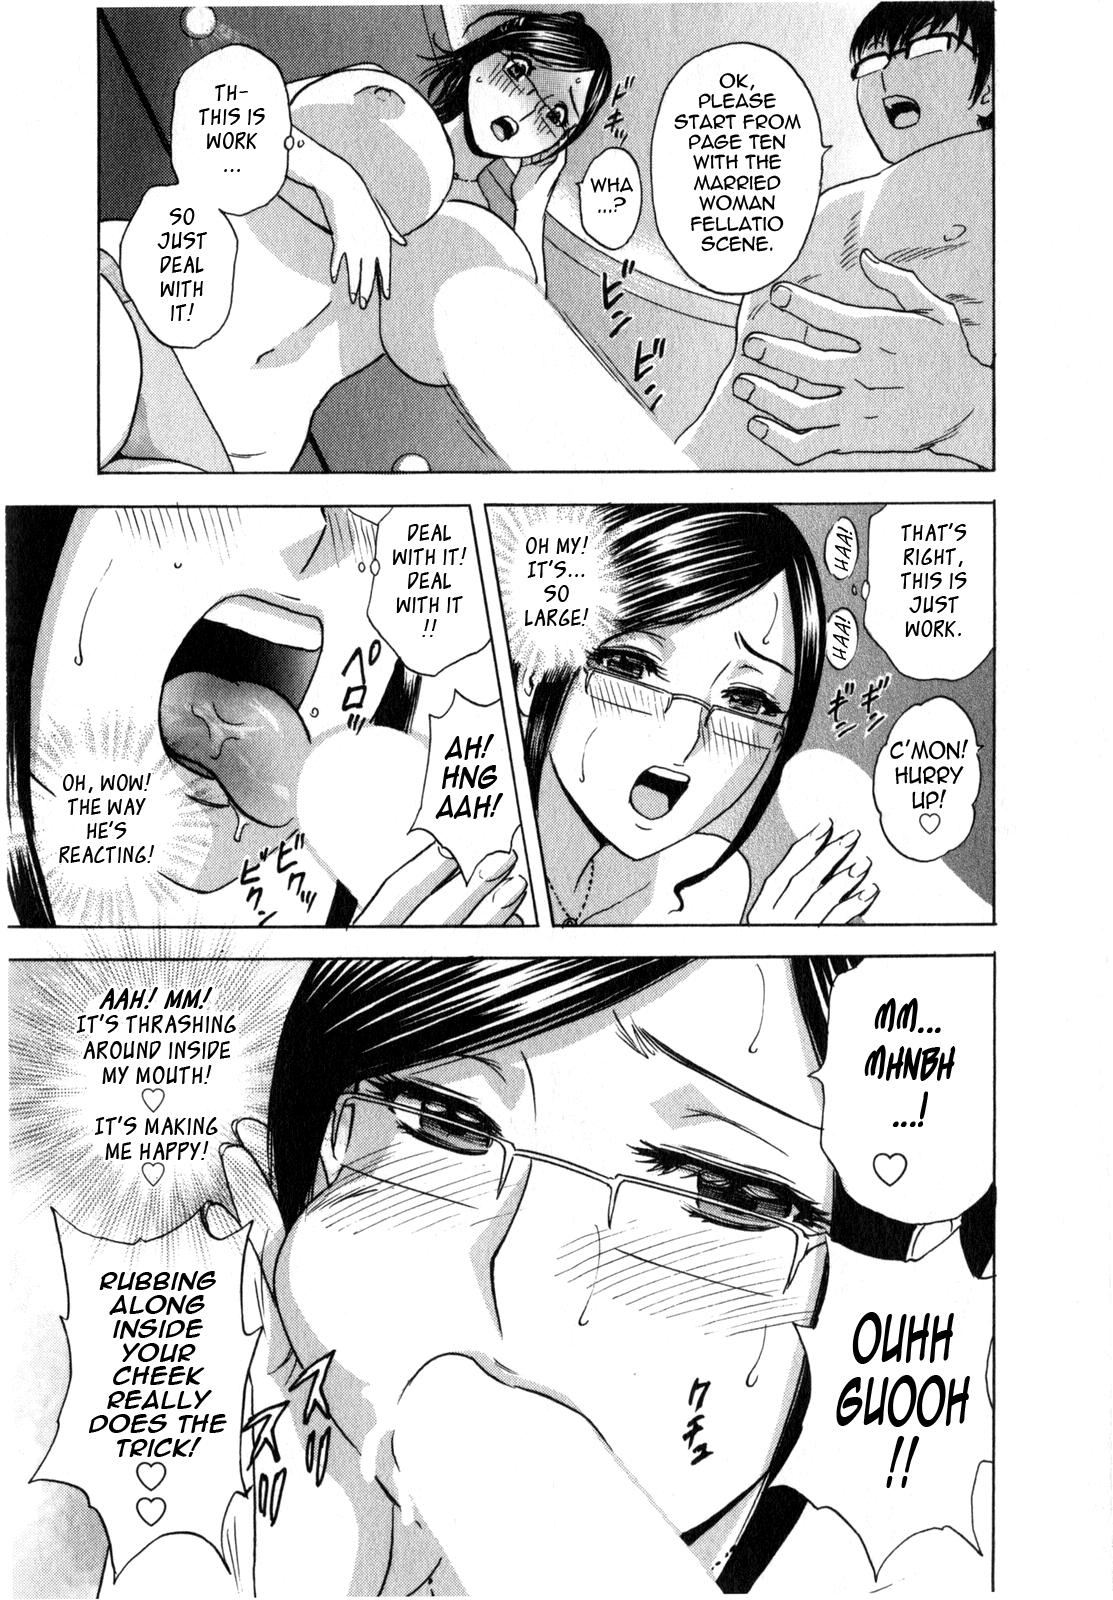 [Hidemaru] Life with Married Women Just Like a Manga 2 - Ch. 1-3 [English] {Tadanohito} 18